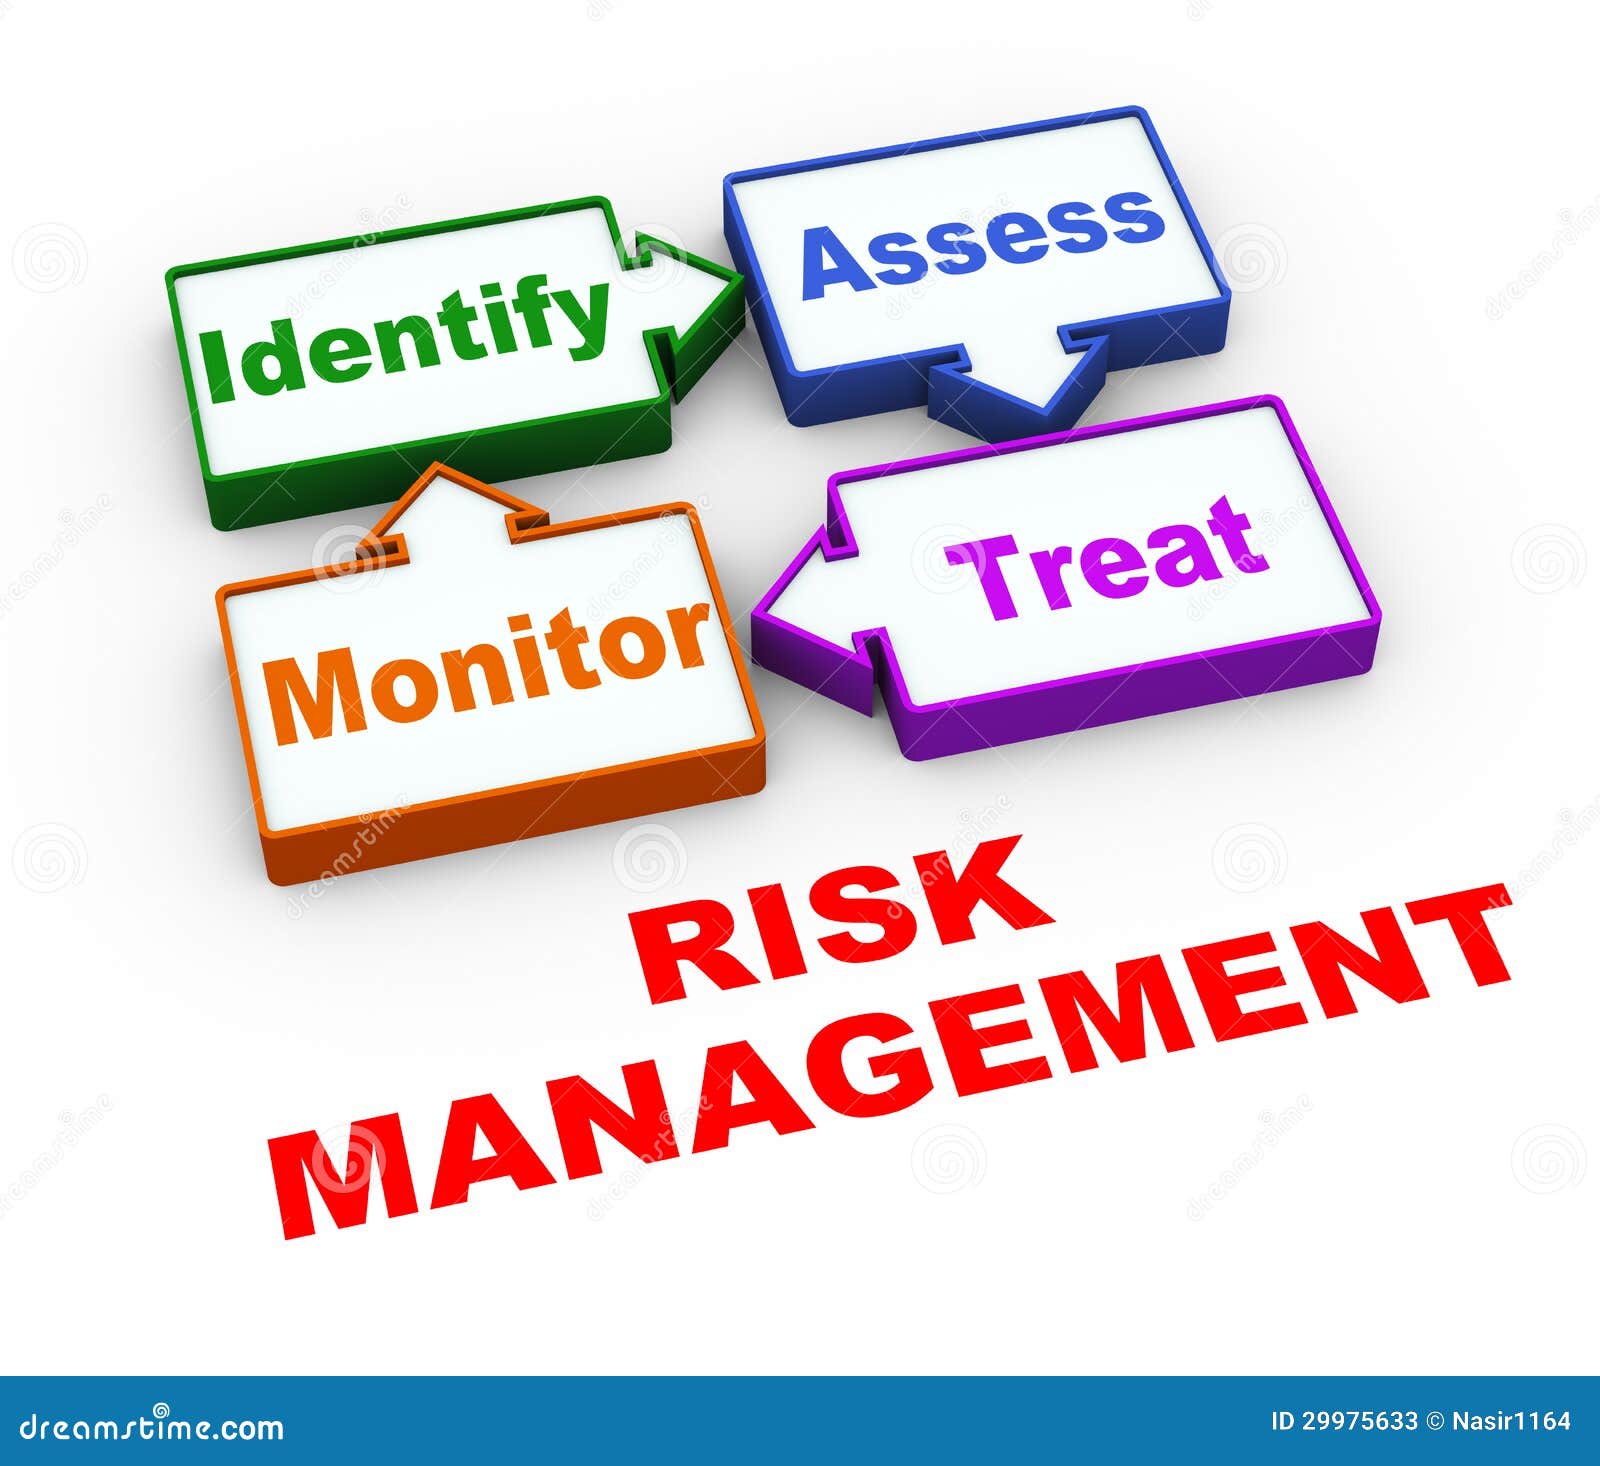 clipart risk assessment - photo #49